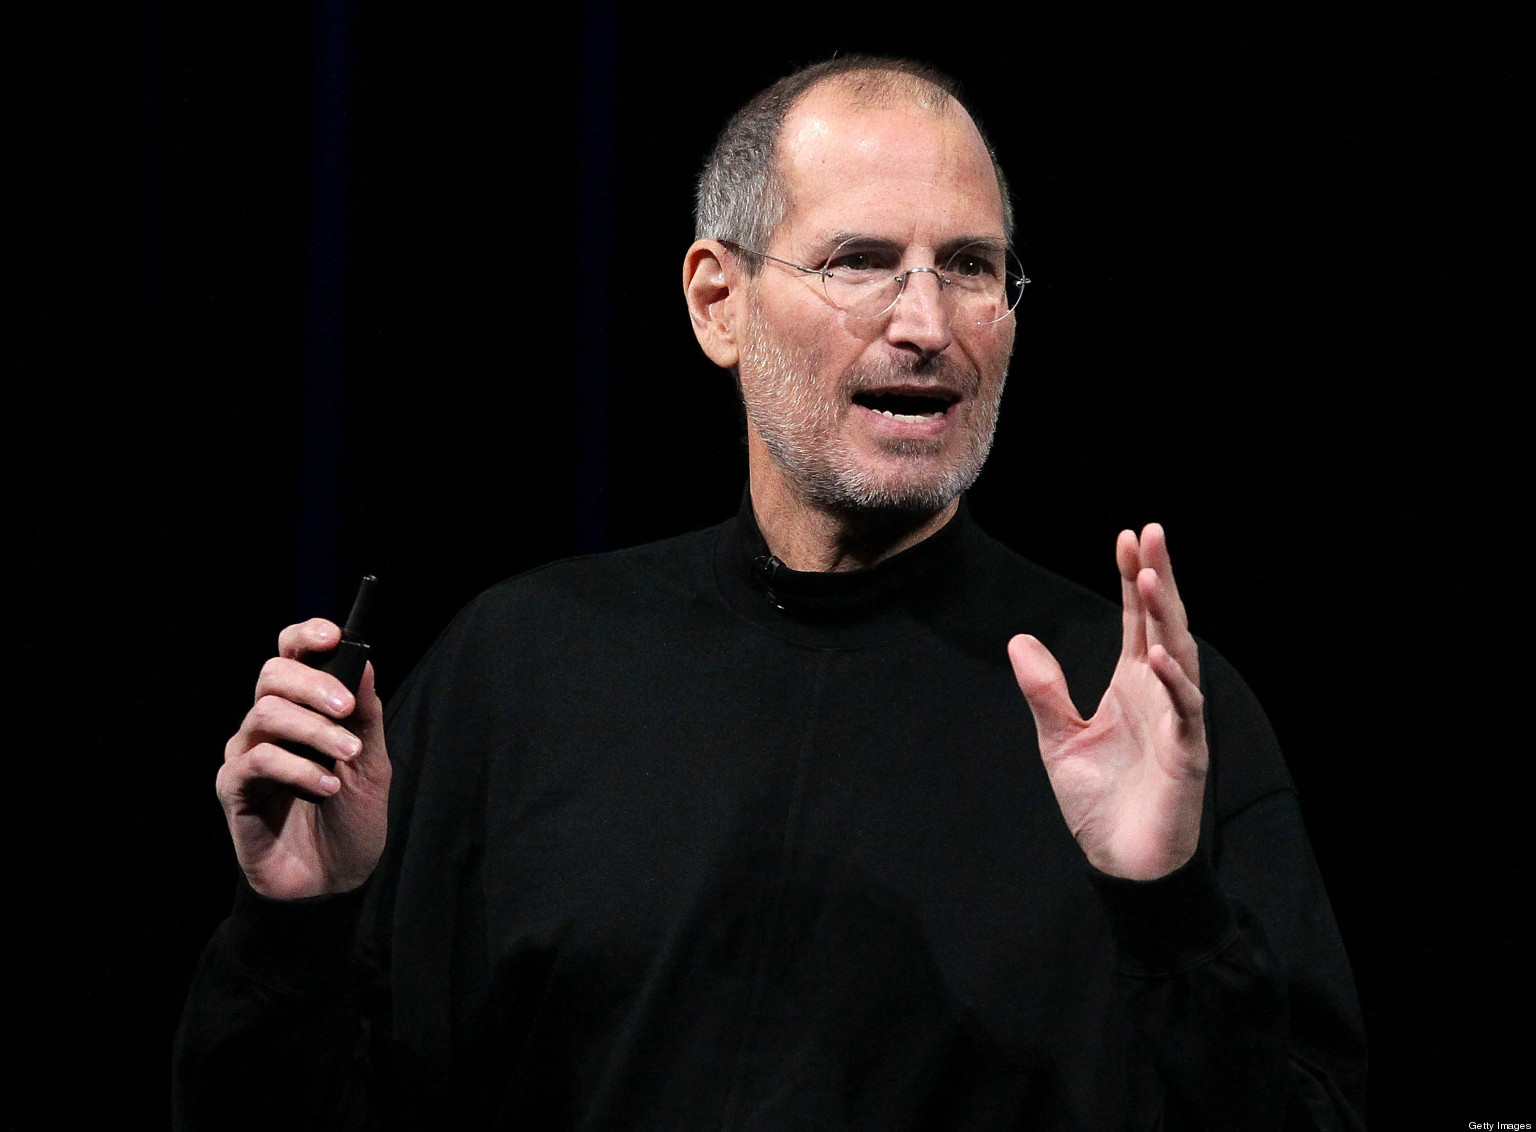 Steve Jobs' 10 best Quotes - Inspiring